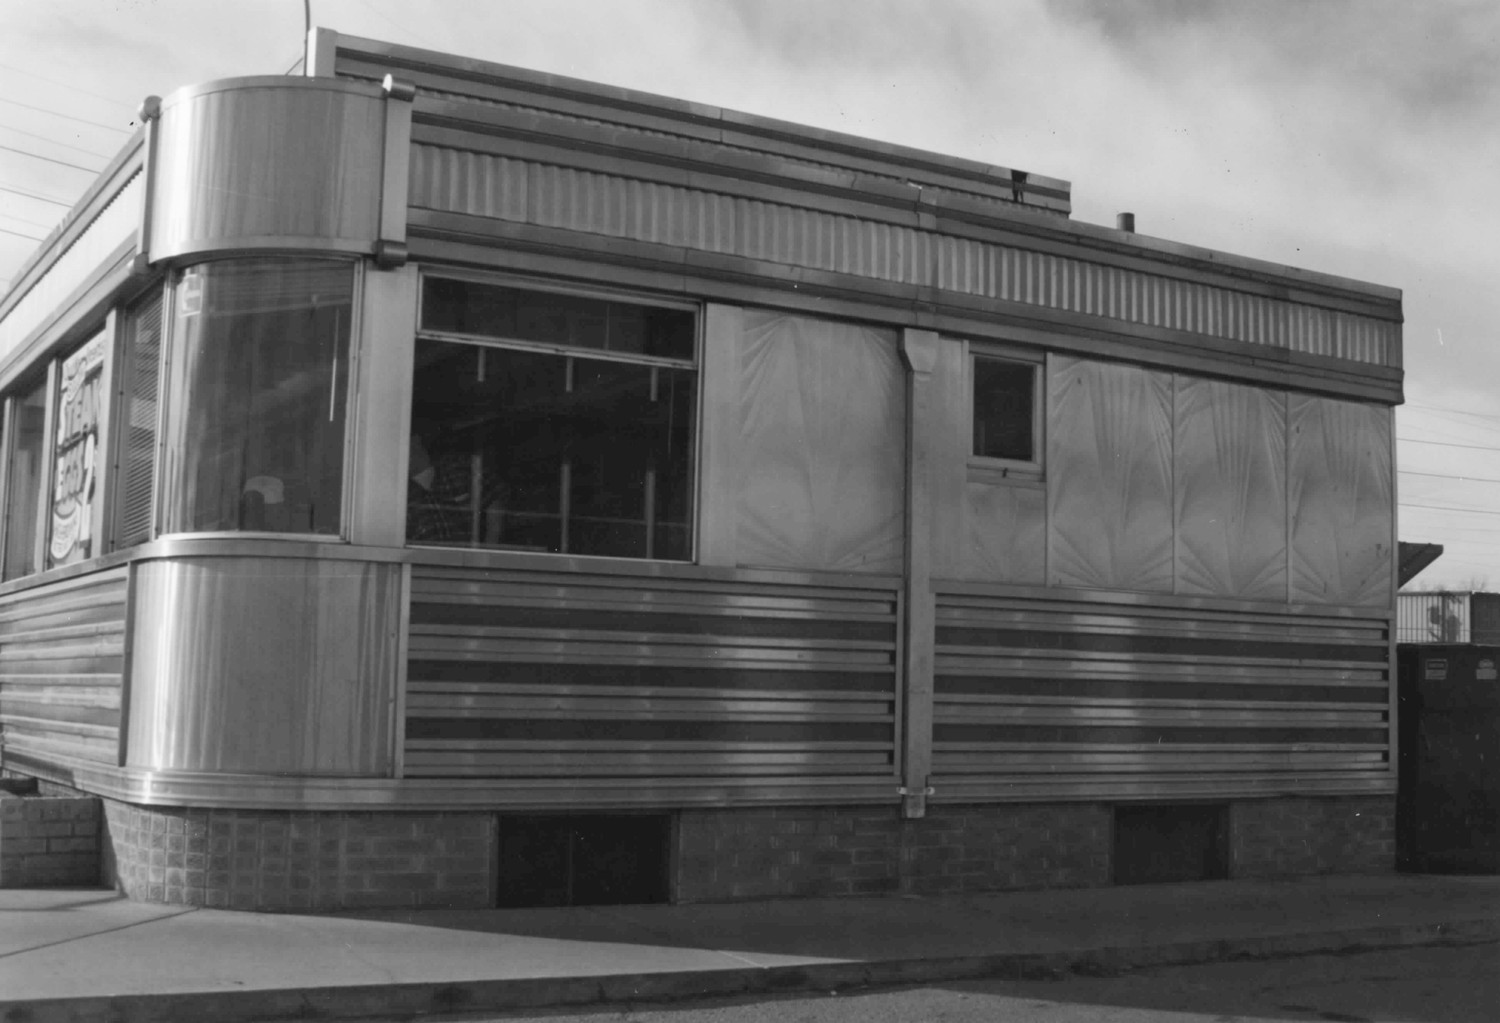 Davies' Chuck Wagon Diner, Lakewood Colorado Diner, east elevation, facing northwest (1997)